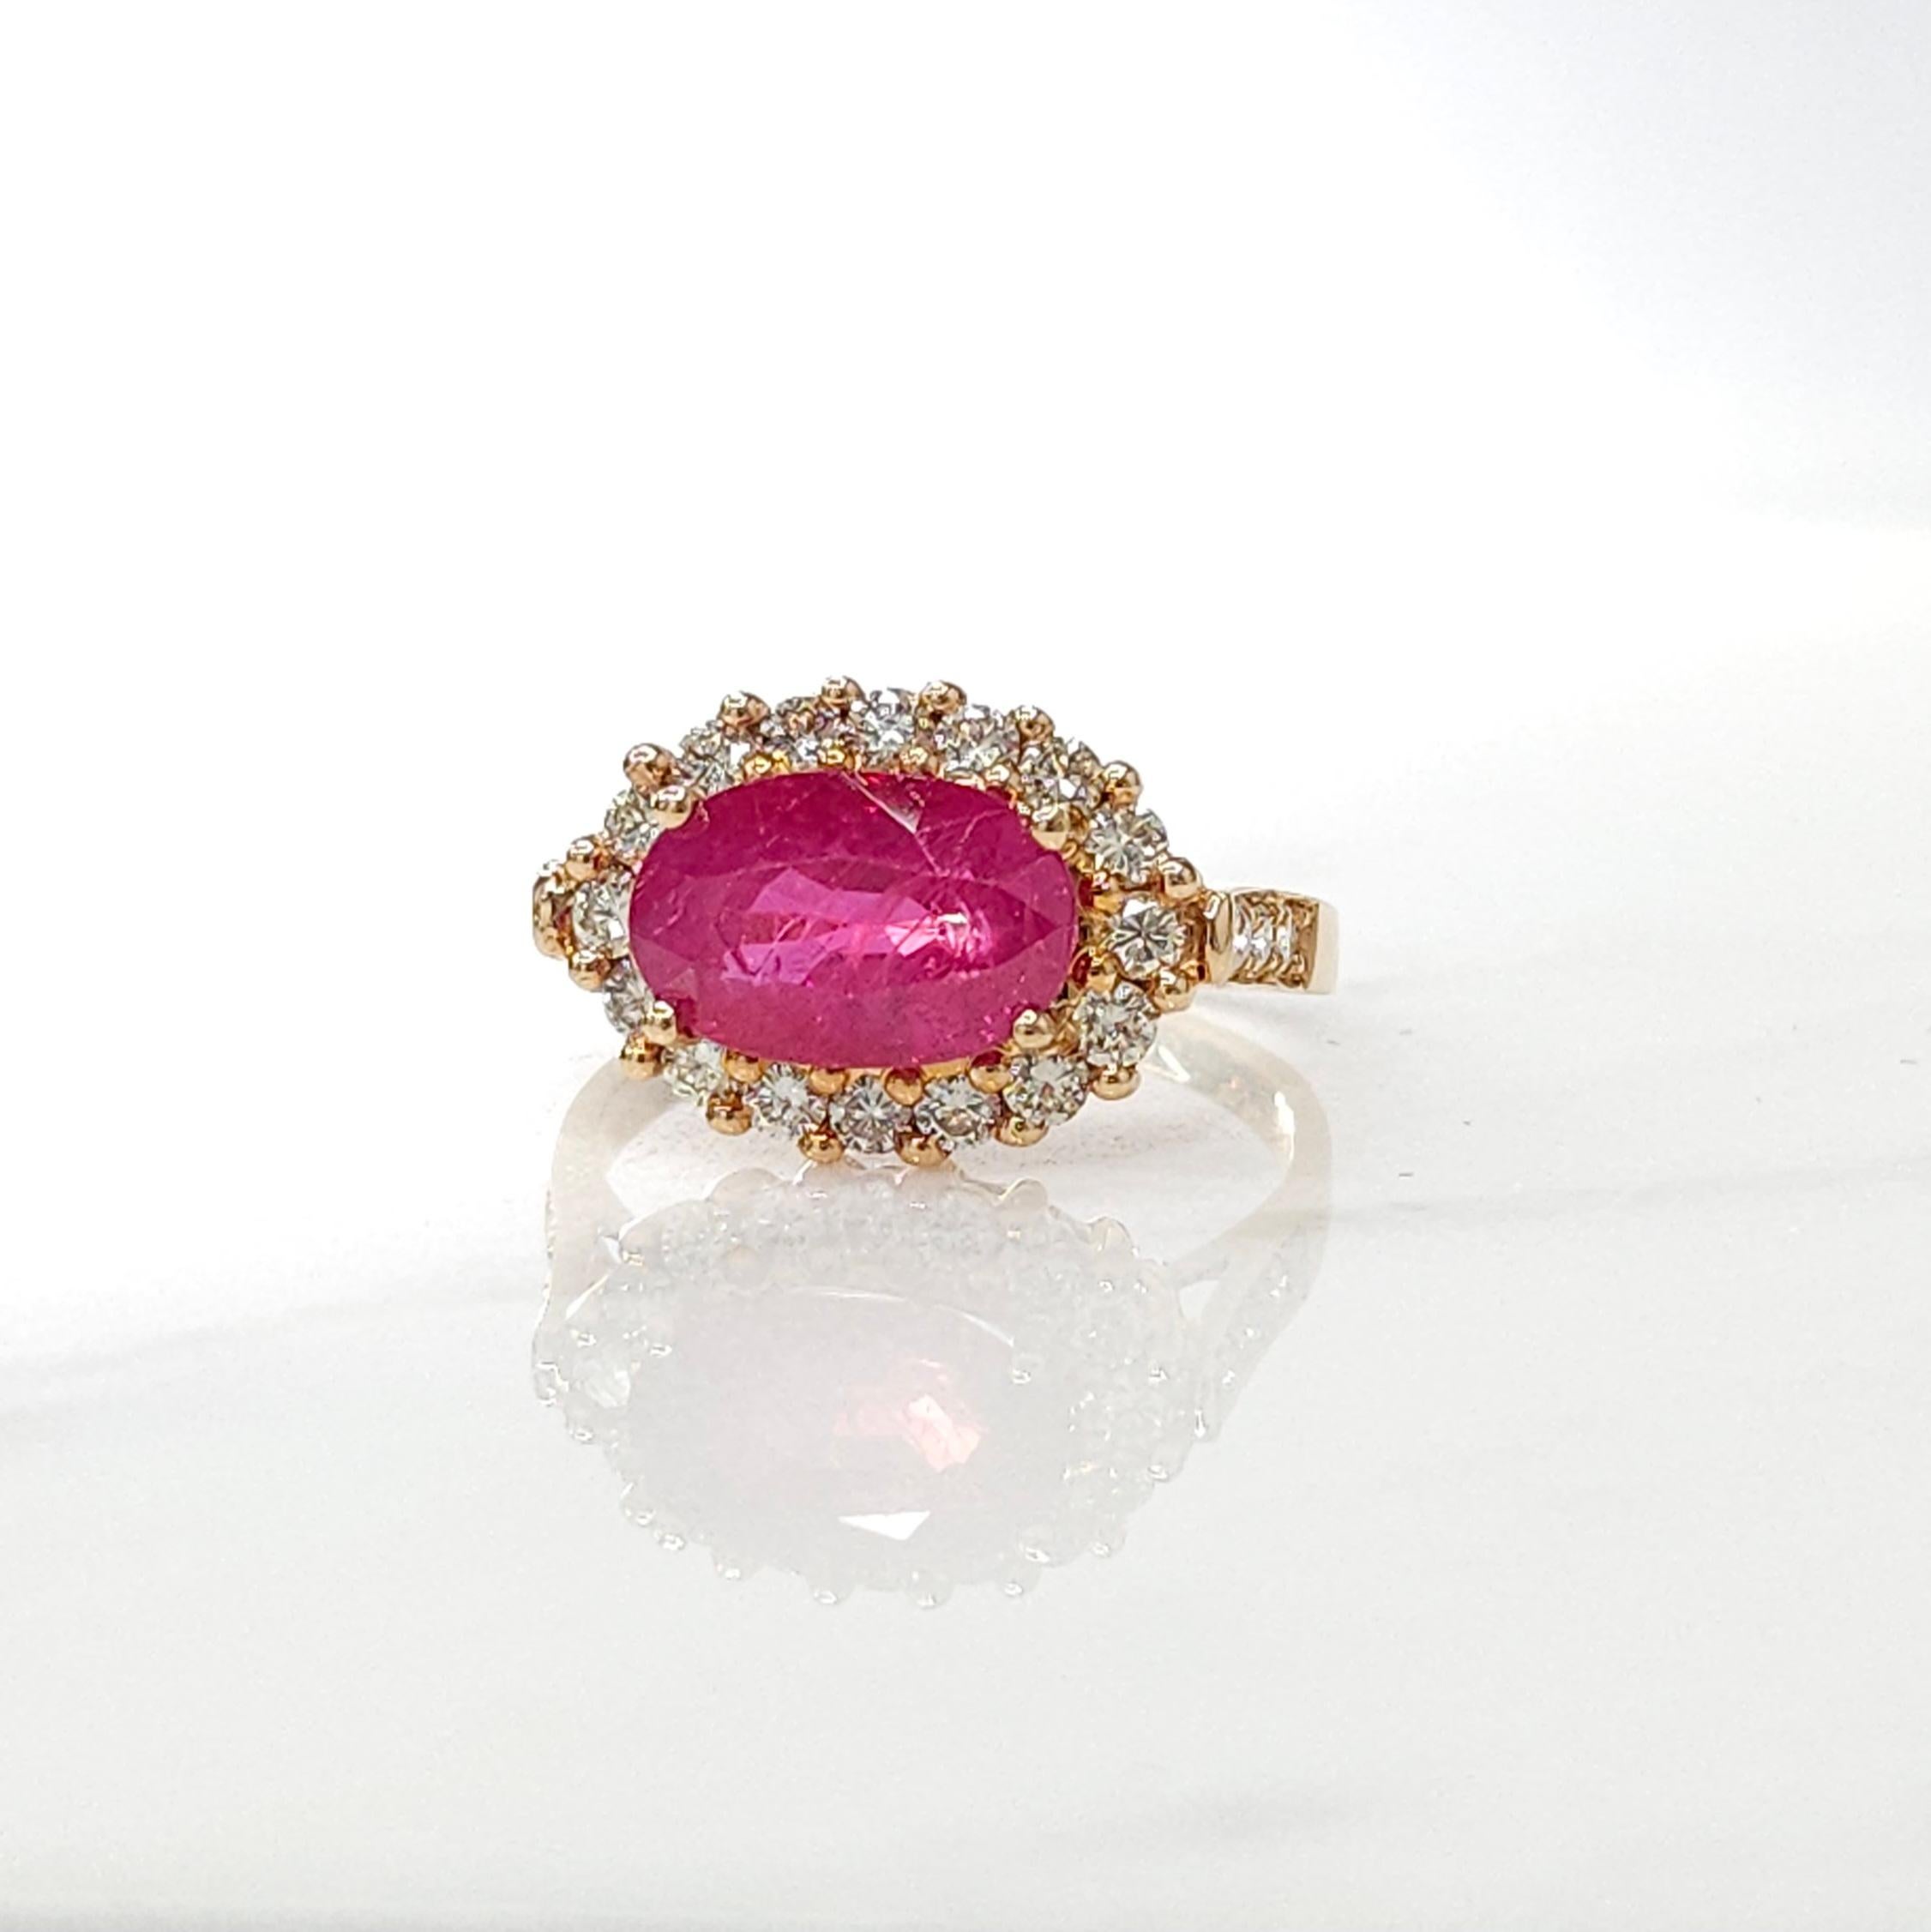 IGI Certified 3.01 Carat Burma Ruby & Diamond Ring in 18K Rose Gold For Sale 2